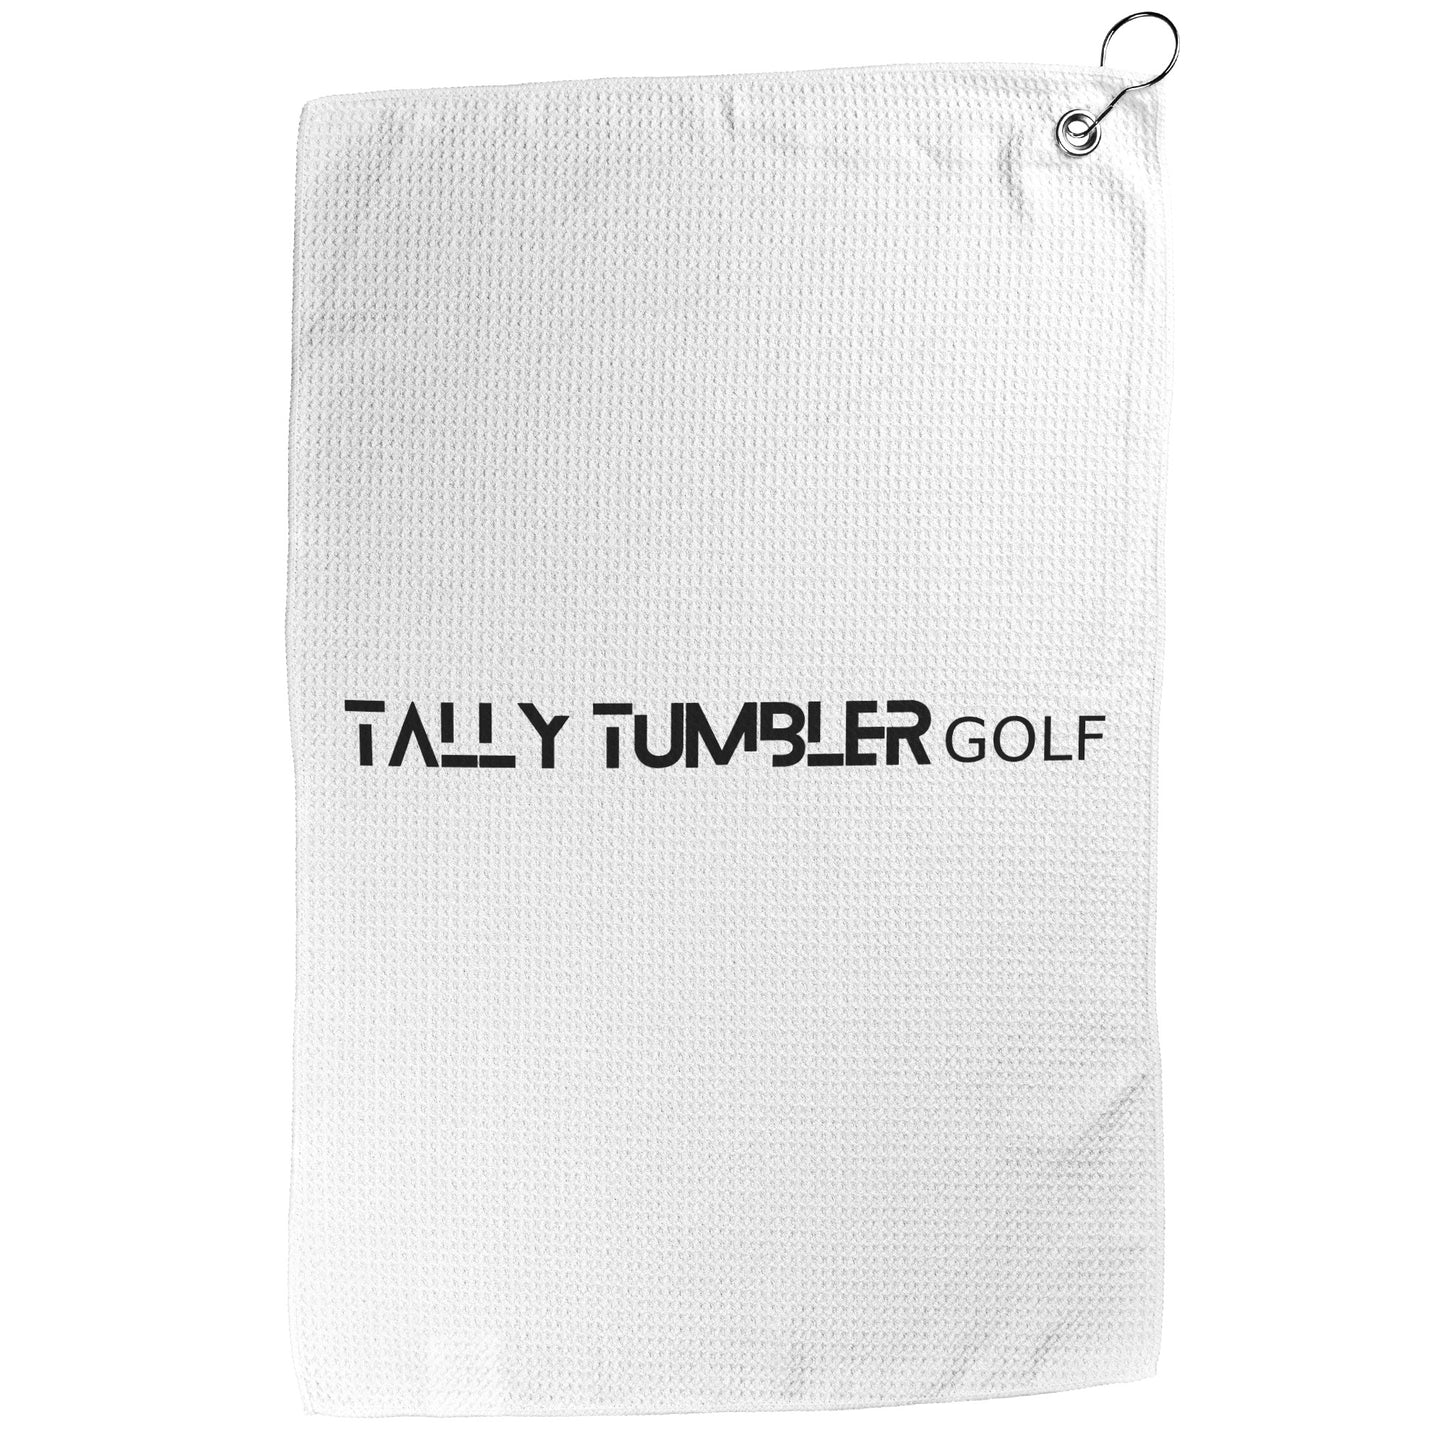 Tally Tumbler Golf Towel